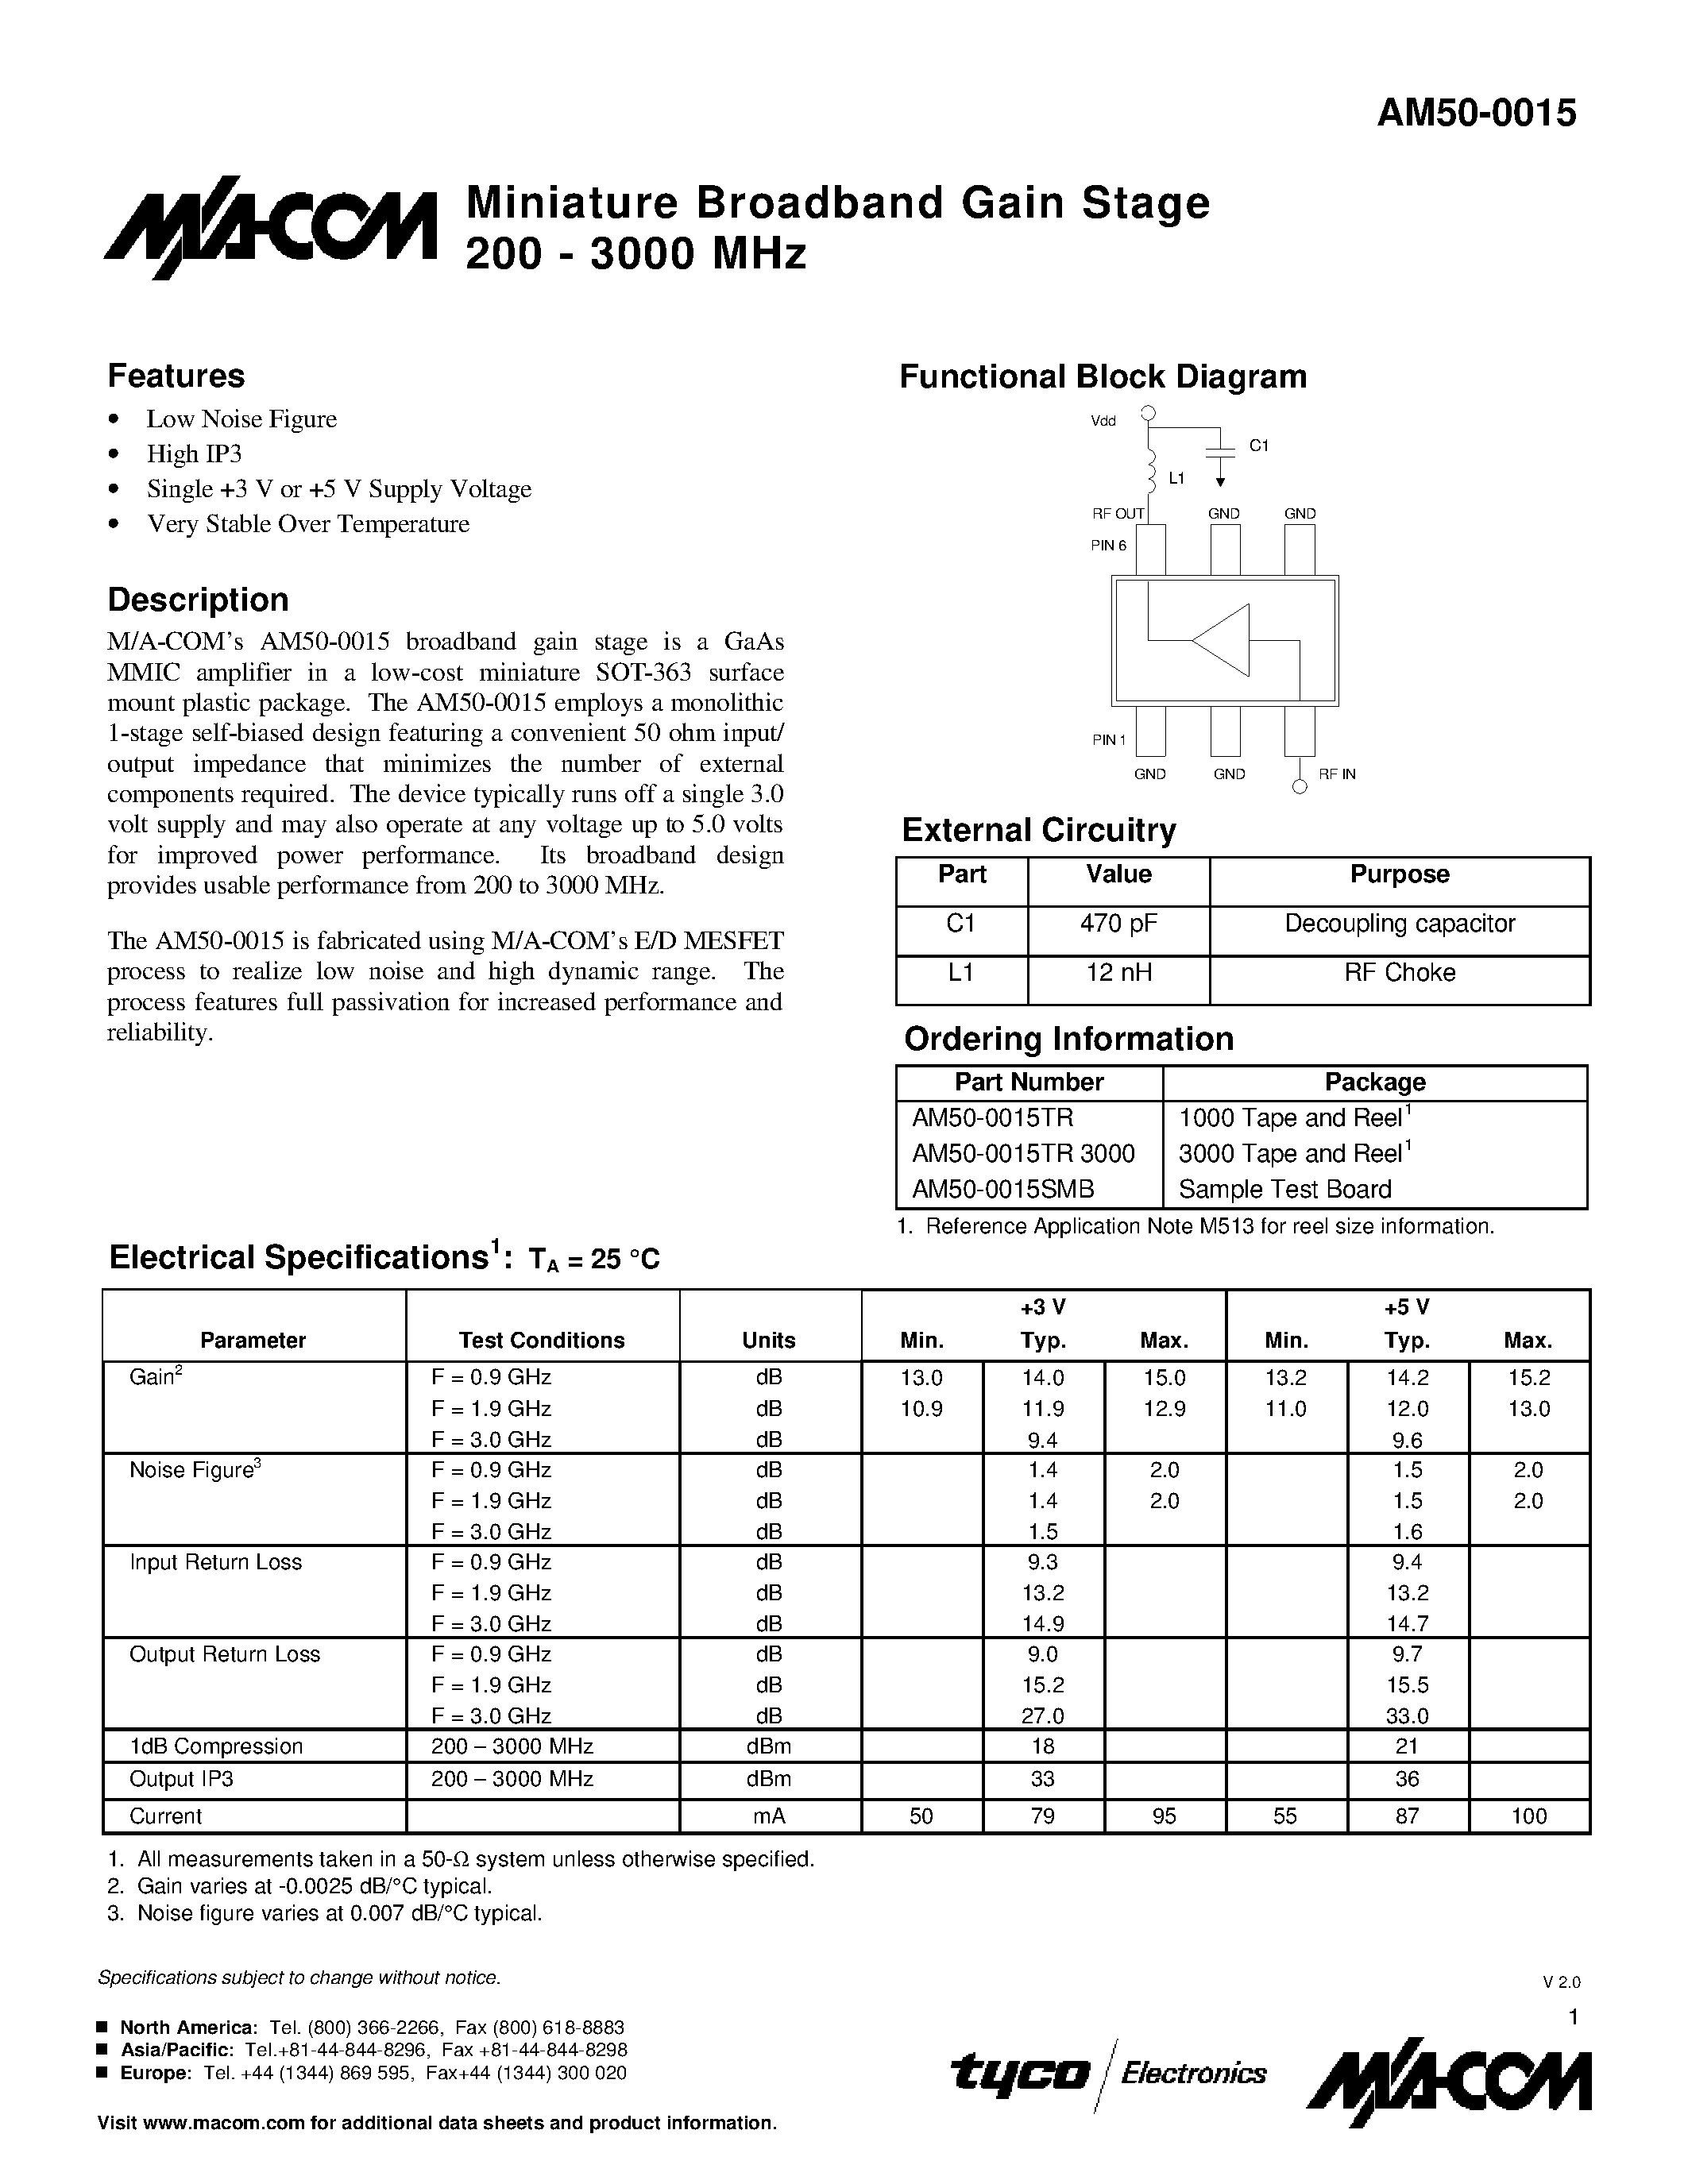 Datasheet AM50-0015SMB - Miniature Broadband Gain Stage 200 - 3000 MHz page 1